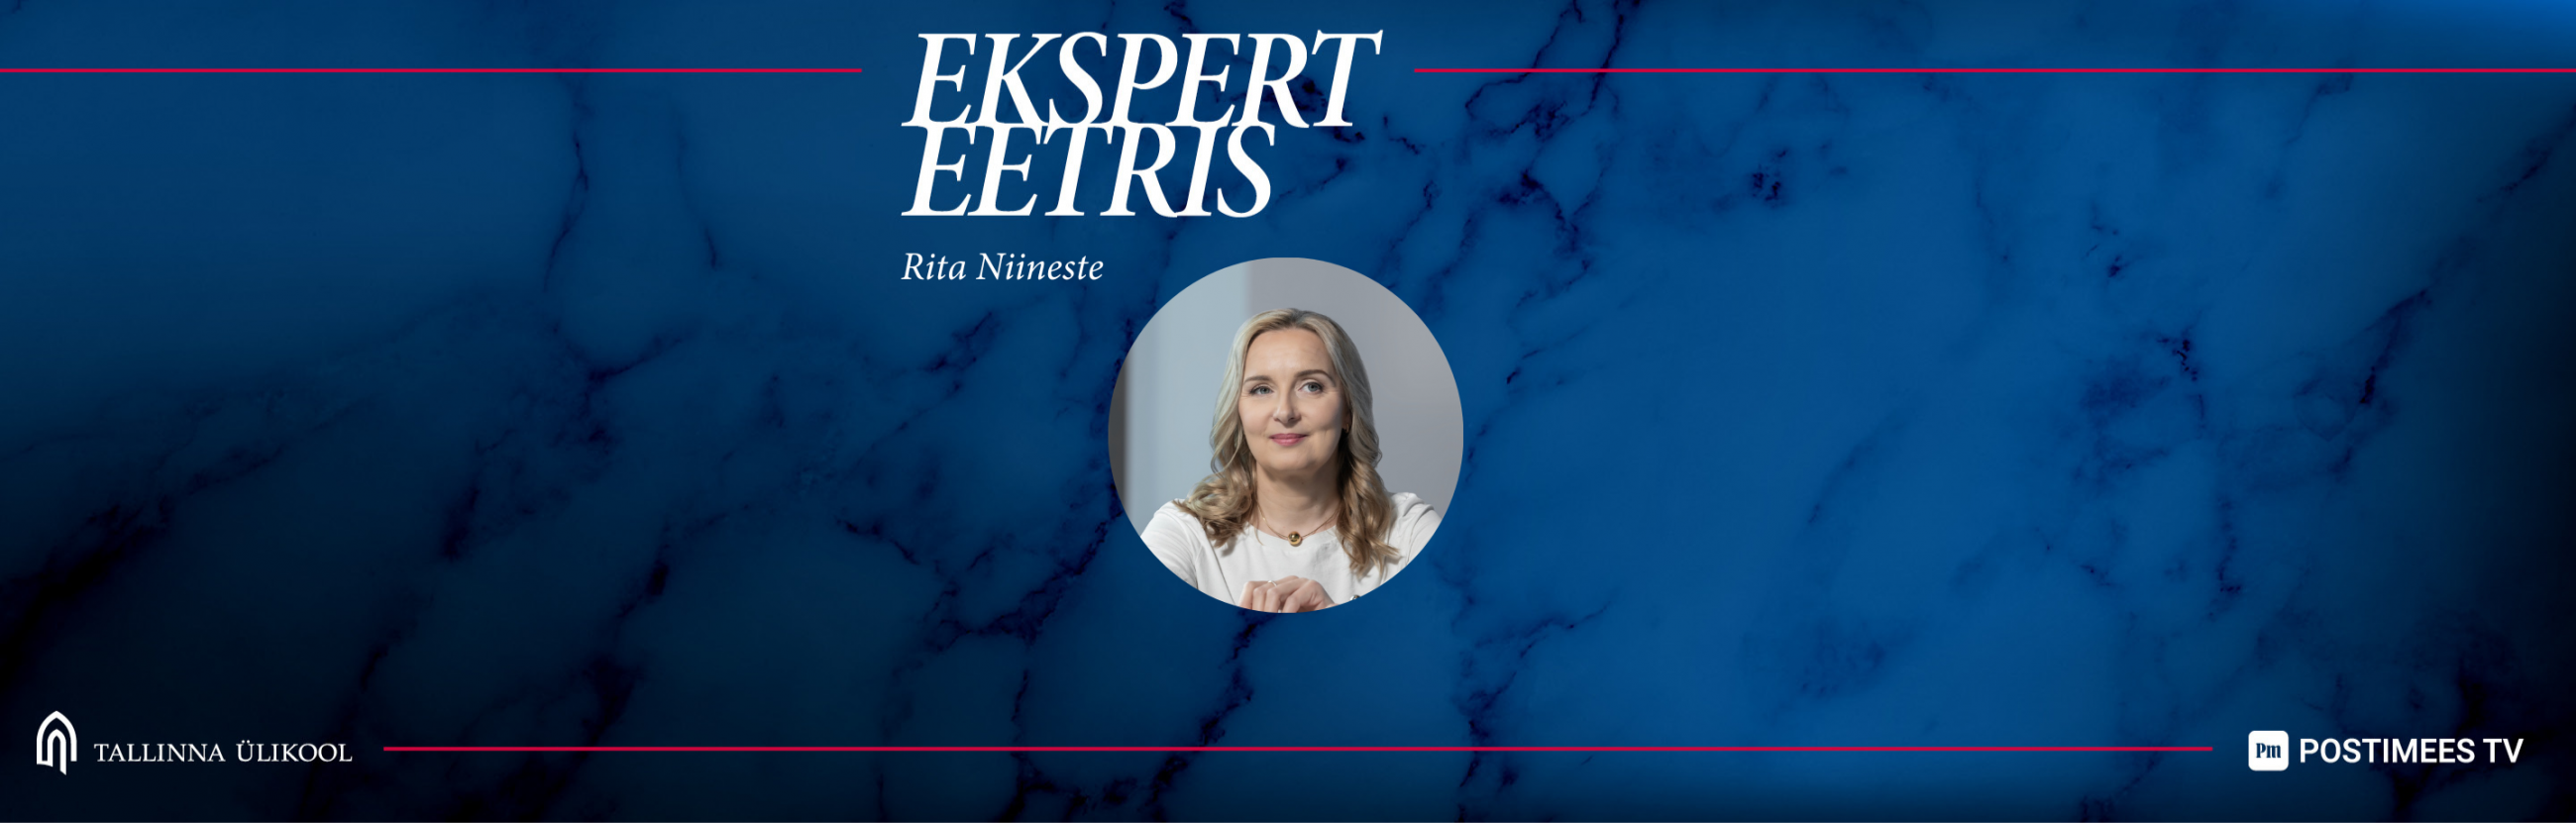 Rita Niineste